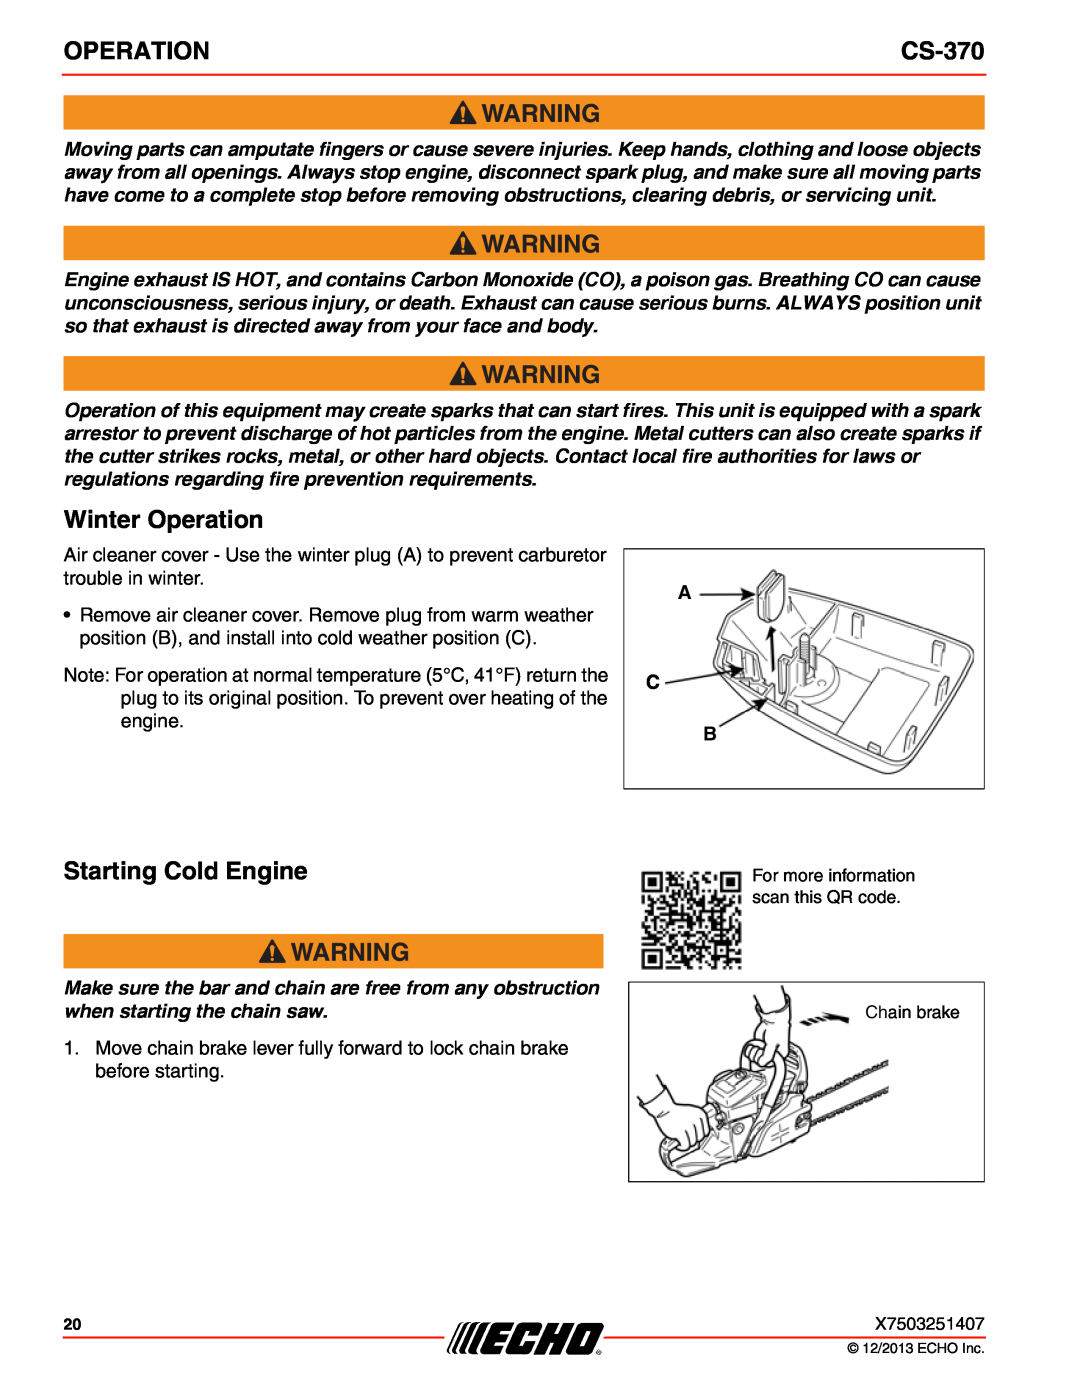 Echo CS-370 instruction manual Winter Operation, Starting Cold Engine, A C B 